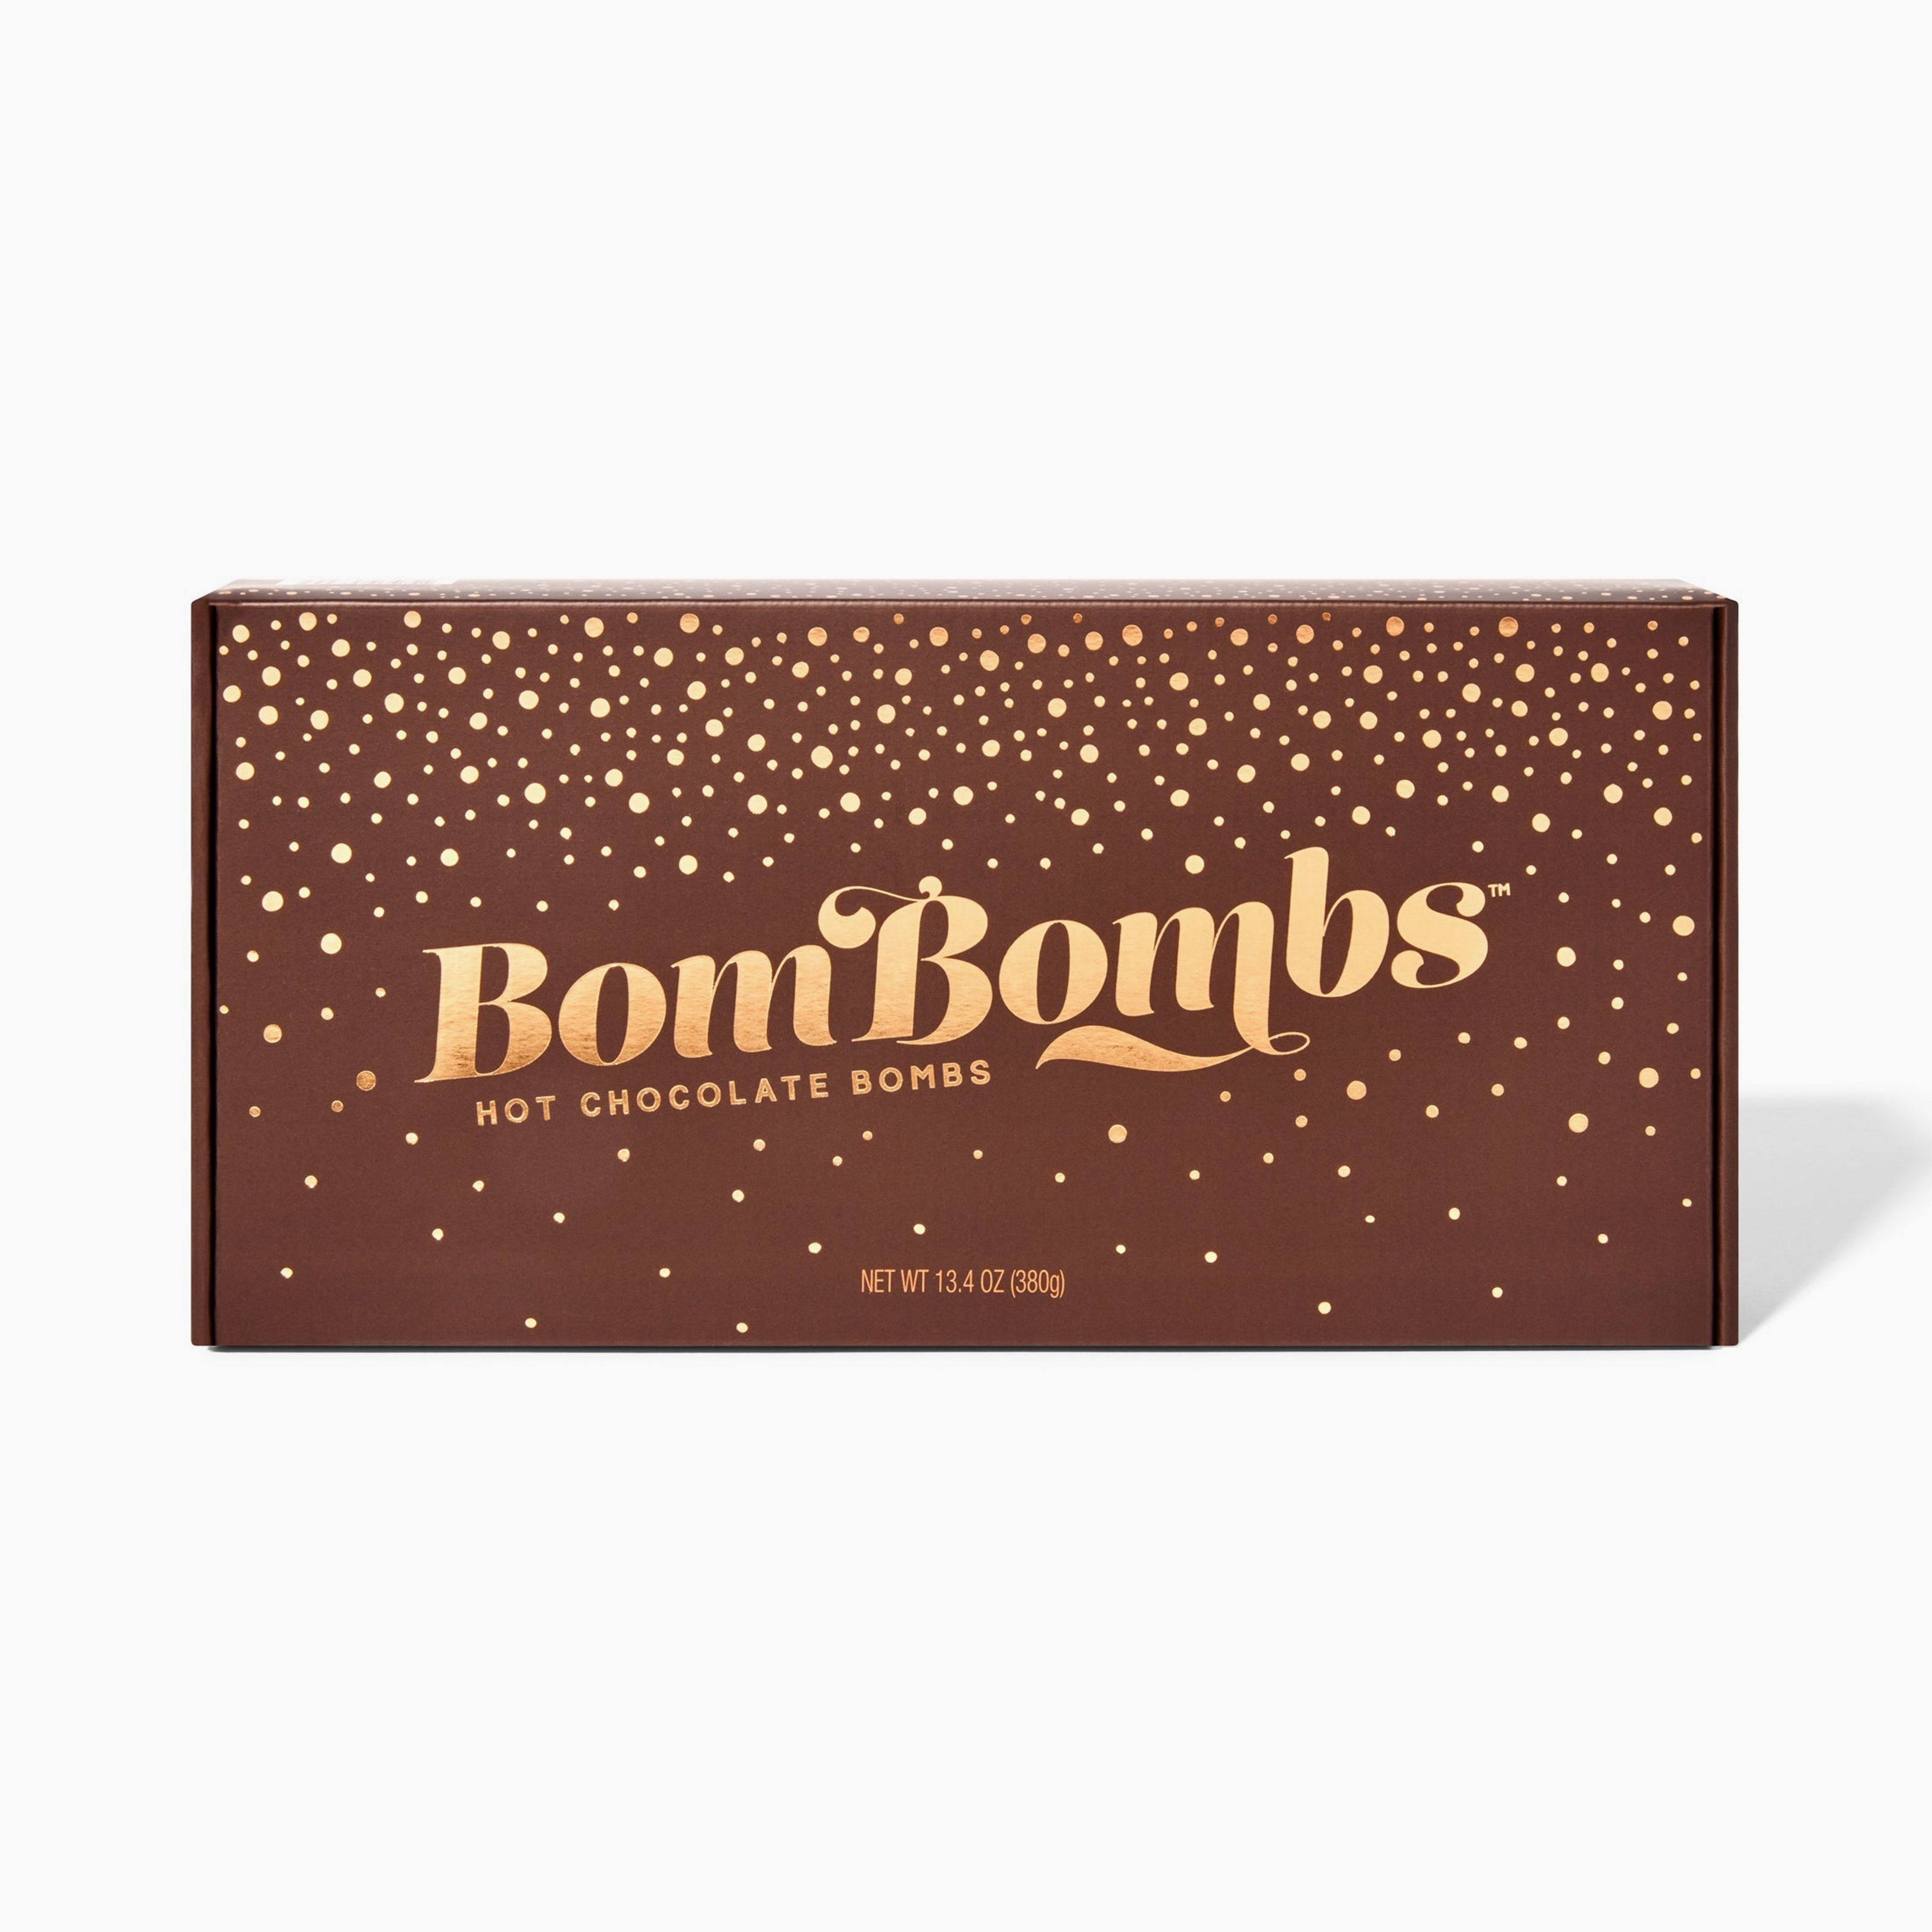 BomBombs Hot Chocolate Bombs, Set of 10